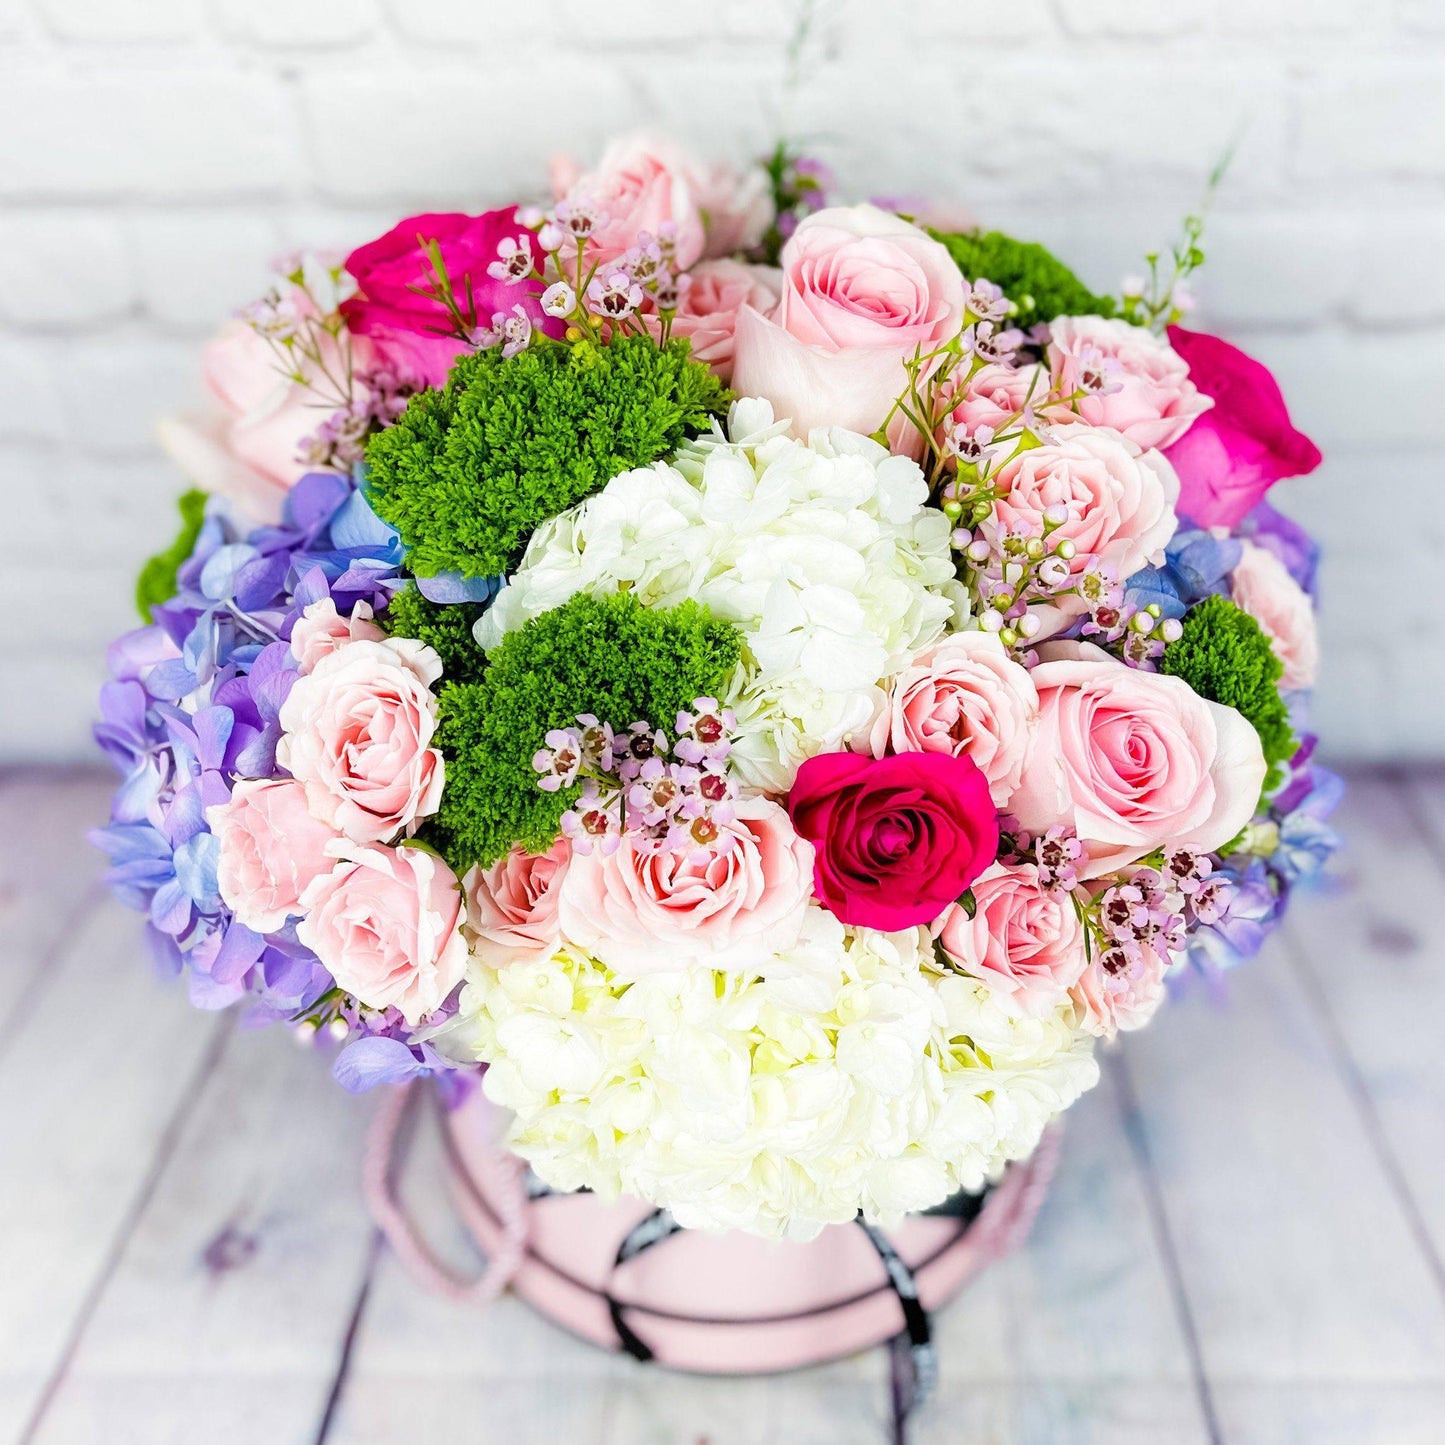 You're Special Box  by DGM Flowers - DGM Flowers  | Fort Lauderdale Florist